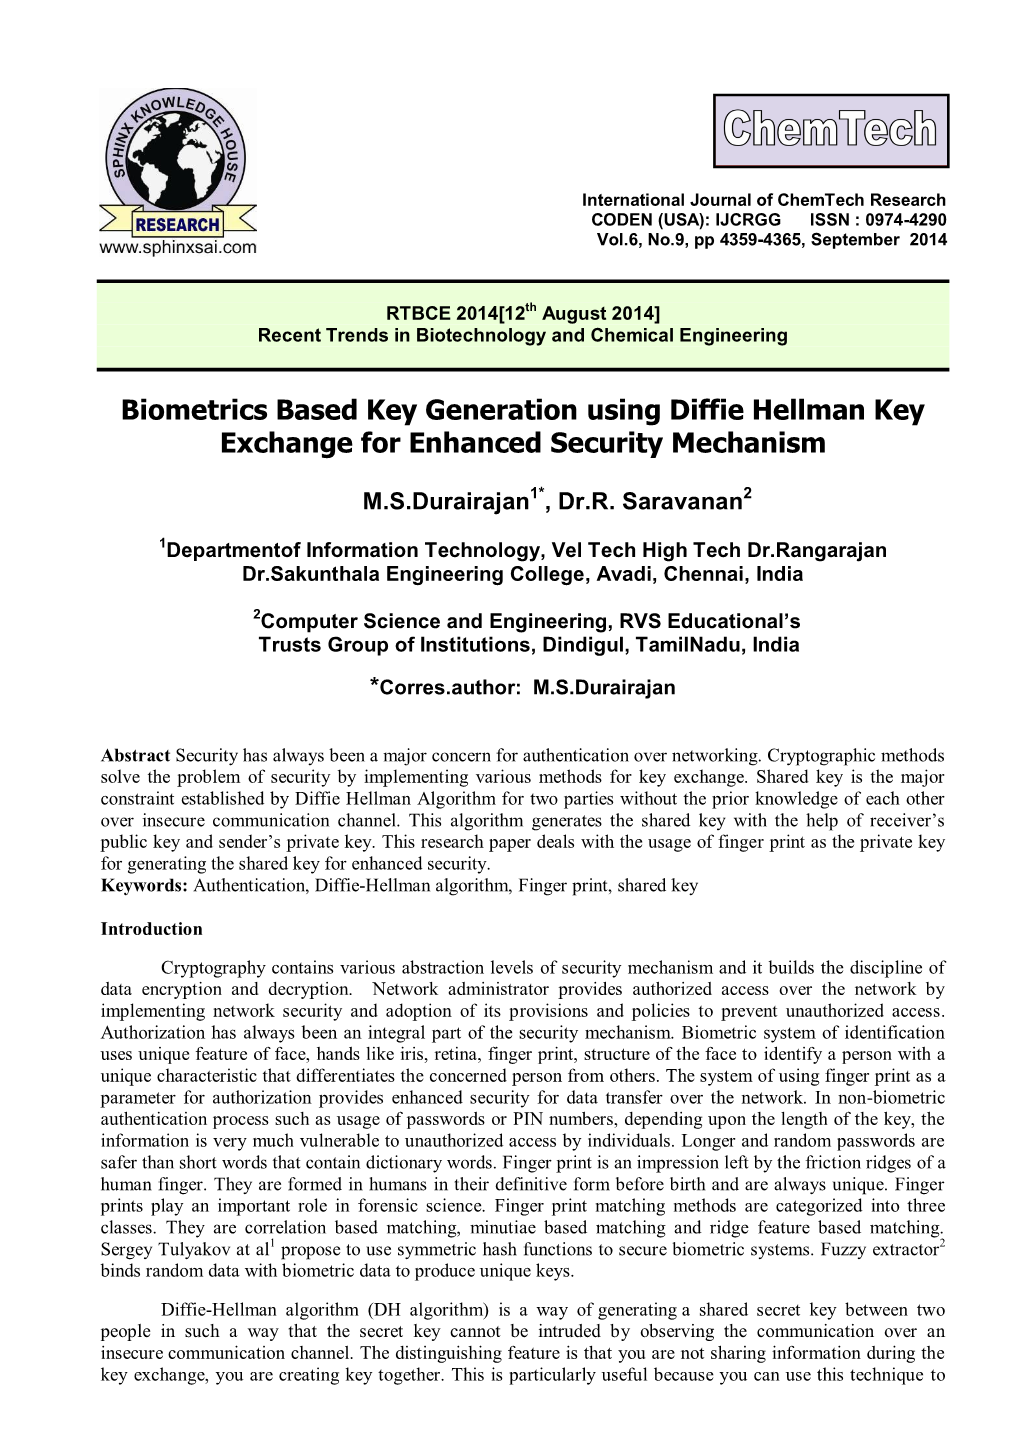 Biometrics Based Key Generation Using Diffie Hellman Key Exchange for Enhanced Security Mechanism